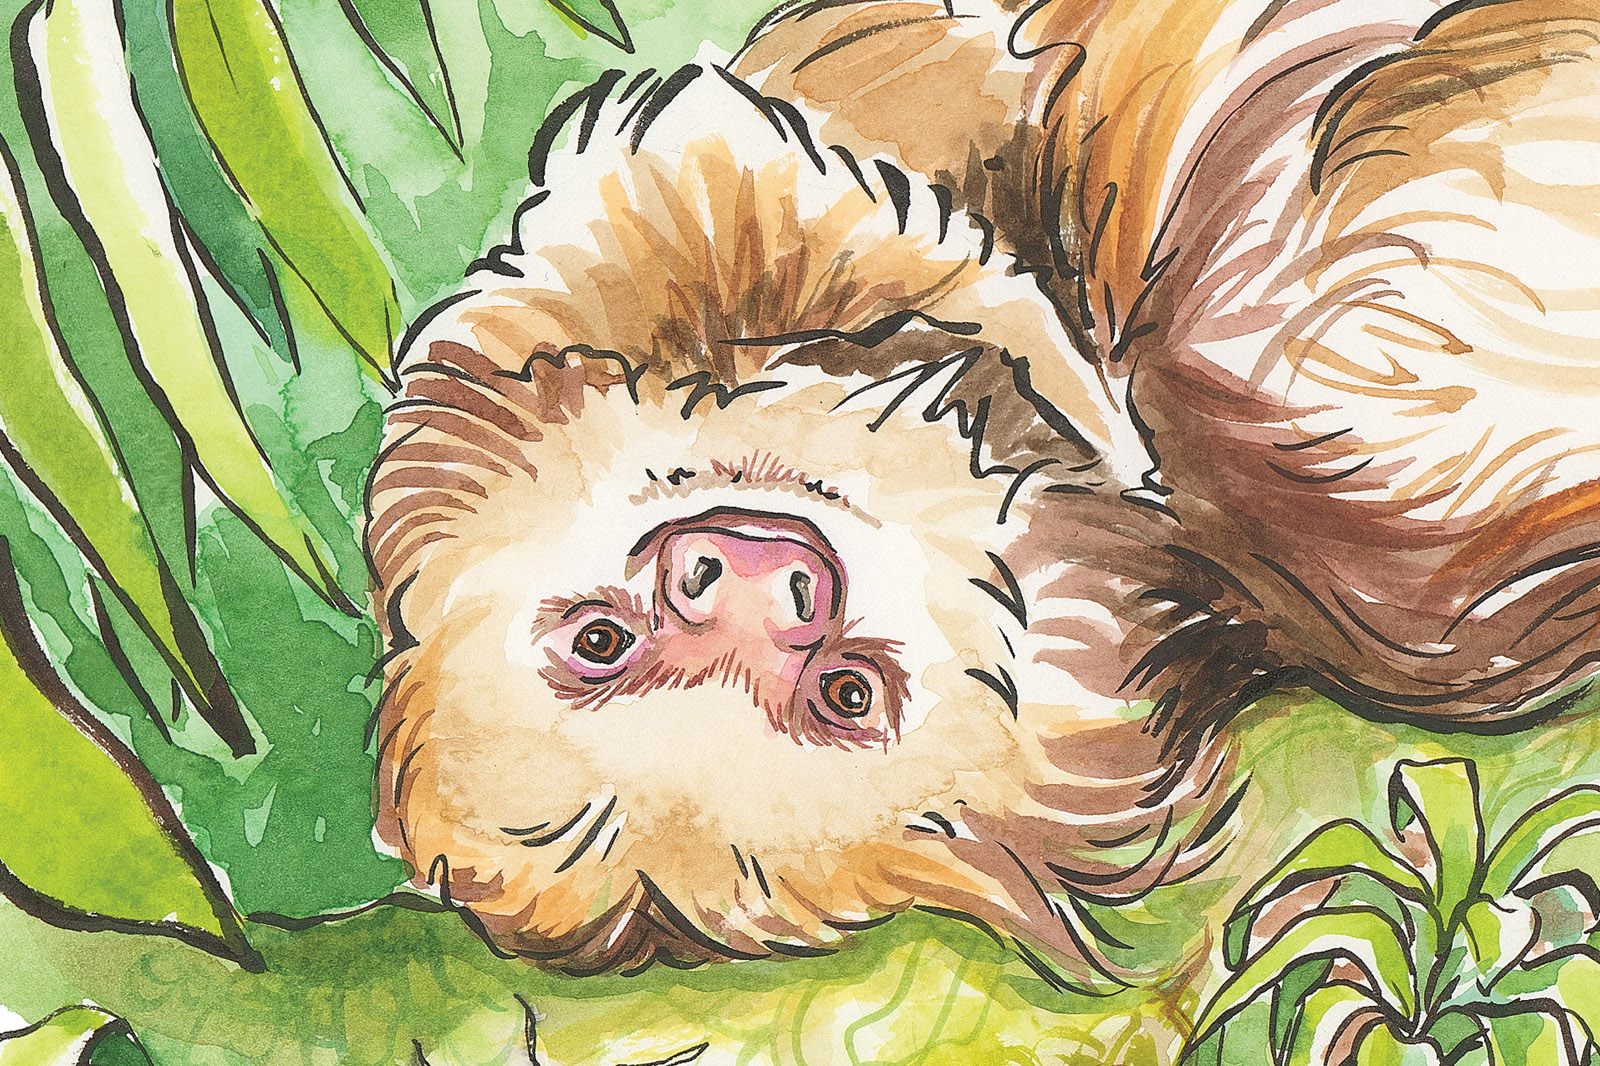 sloth2